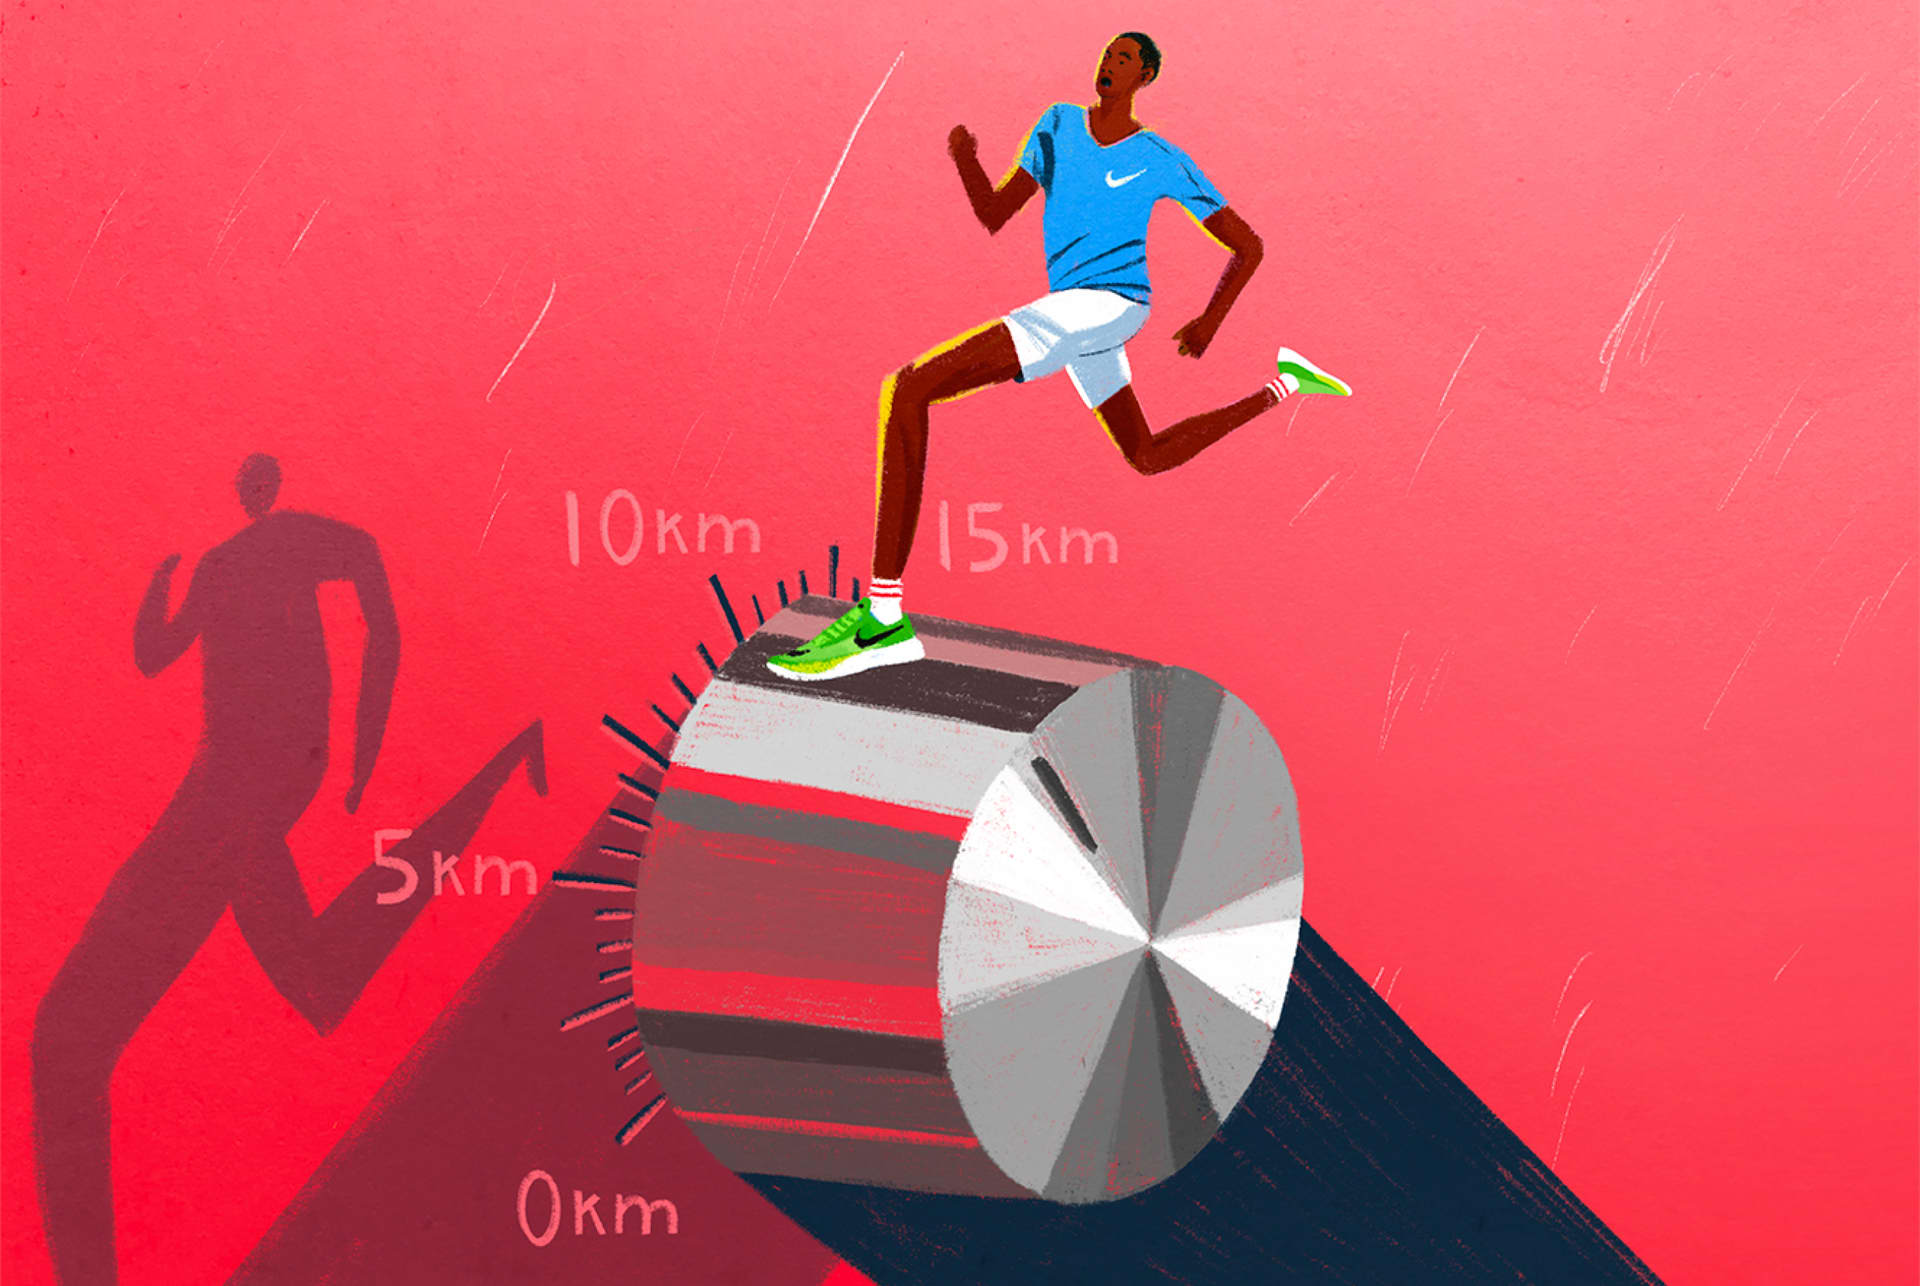 Sjah Herhaal Ga wandelen How to Increase Your Running Mileage Safely. Nike HR